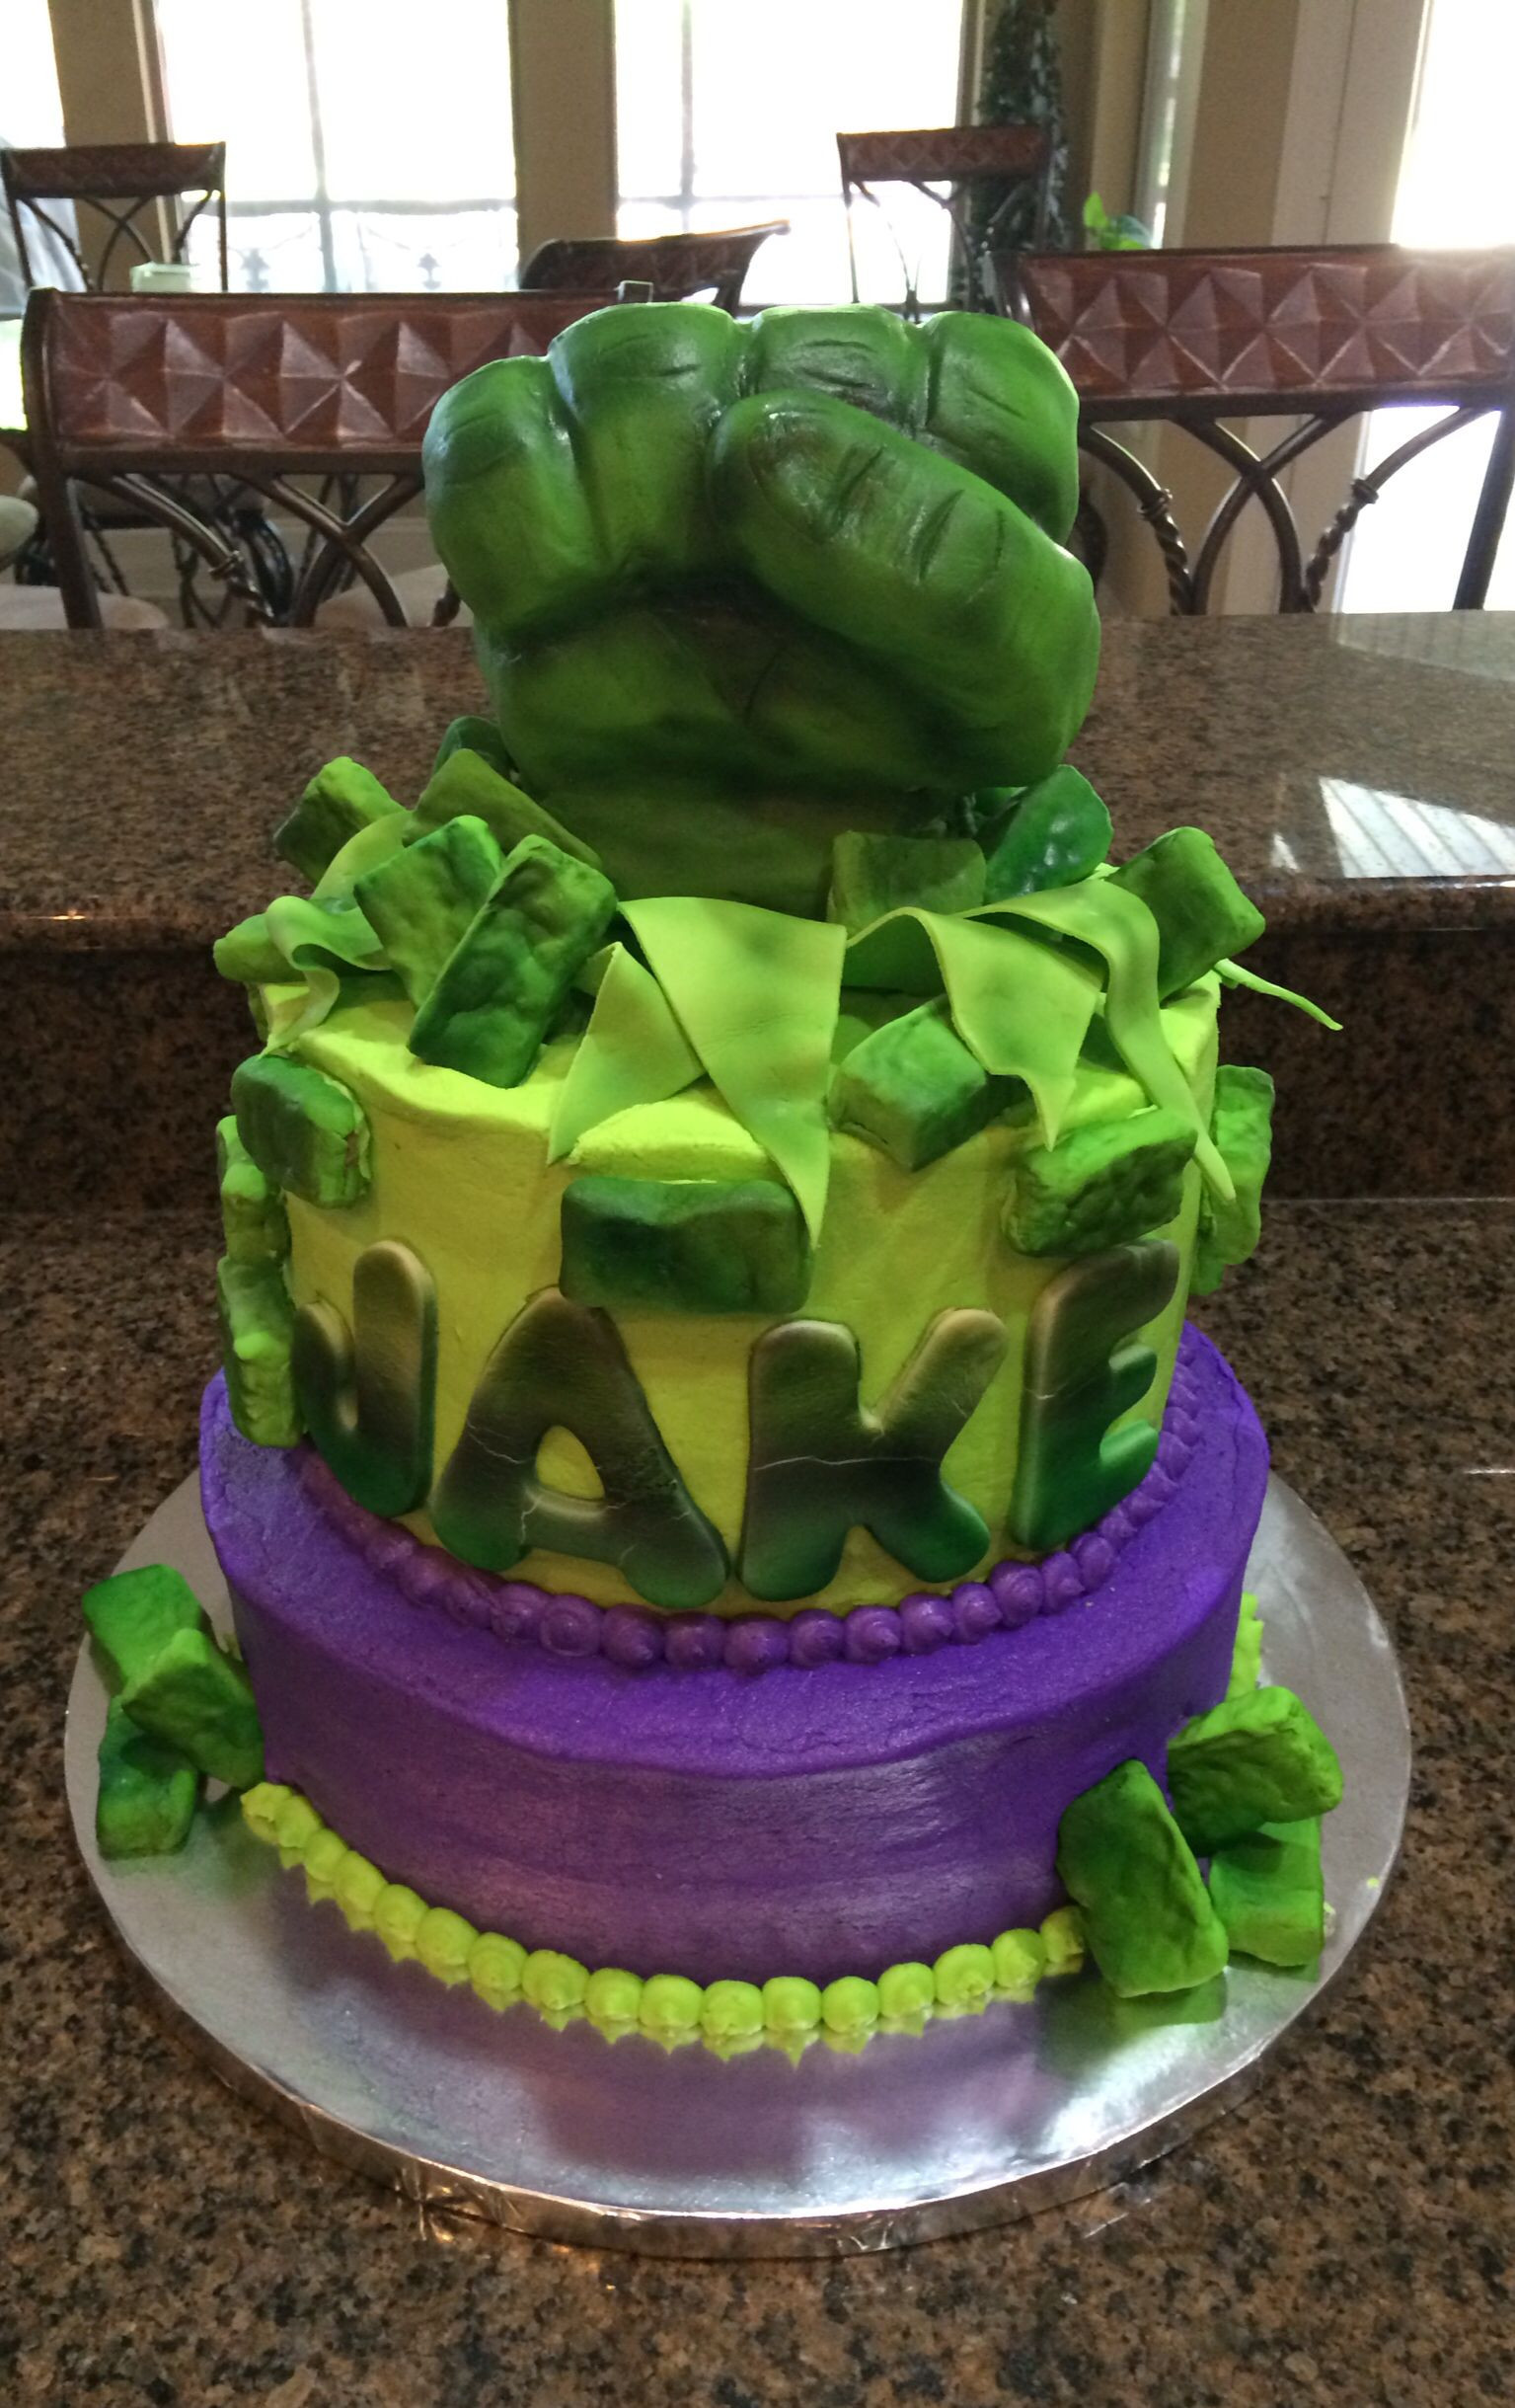 Incredible Hulk Birthday Cake
 Incredible Hulk cake